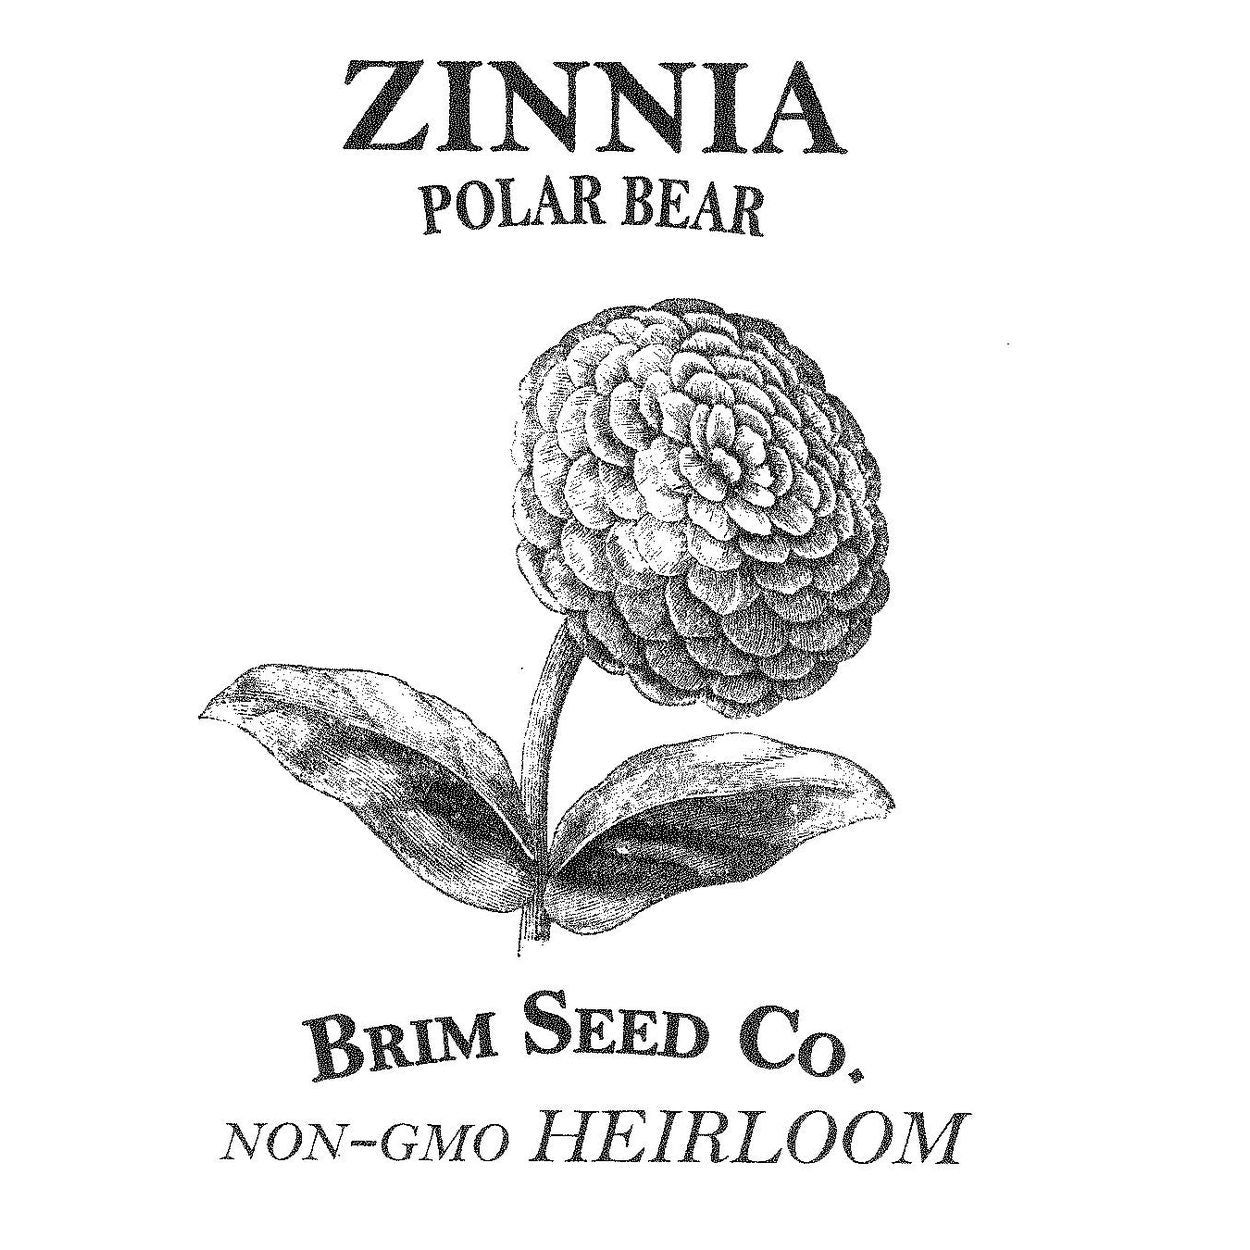 Brim Seed Co. - Polar Bear Zinnia Flower Heirloom Seed